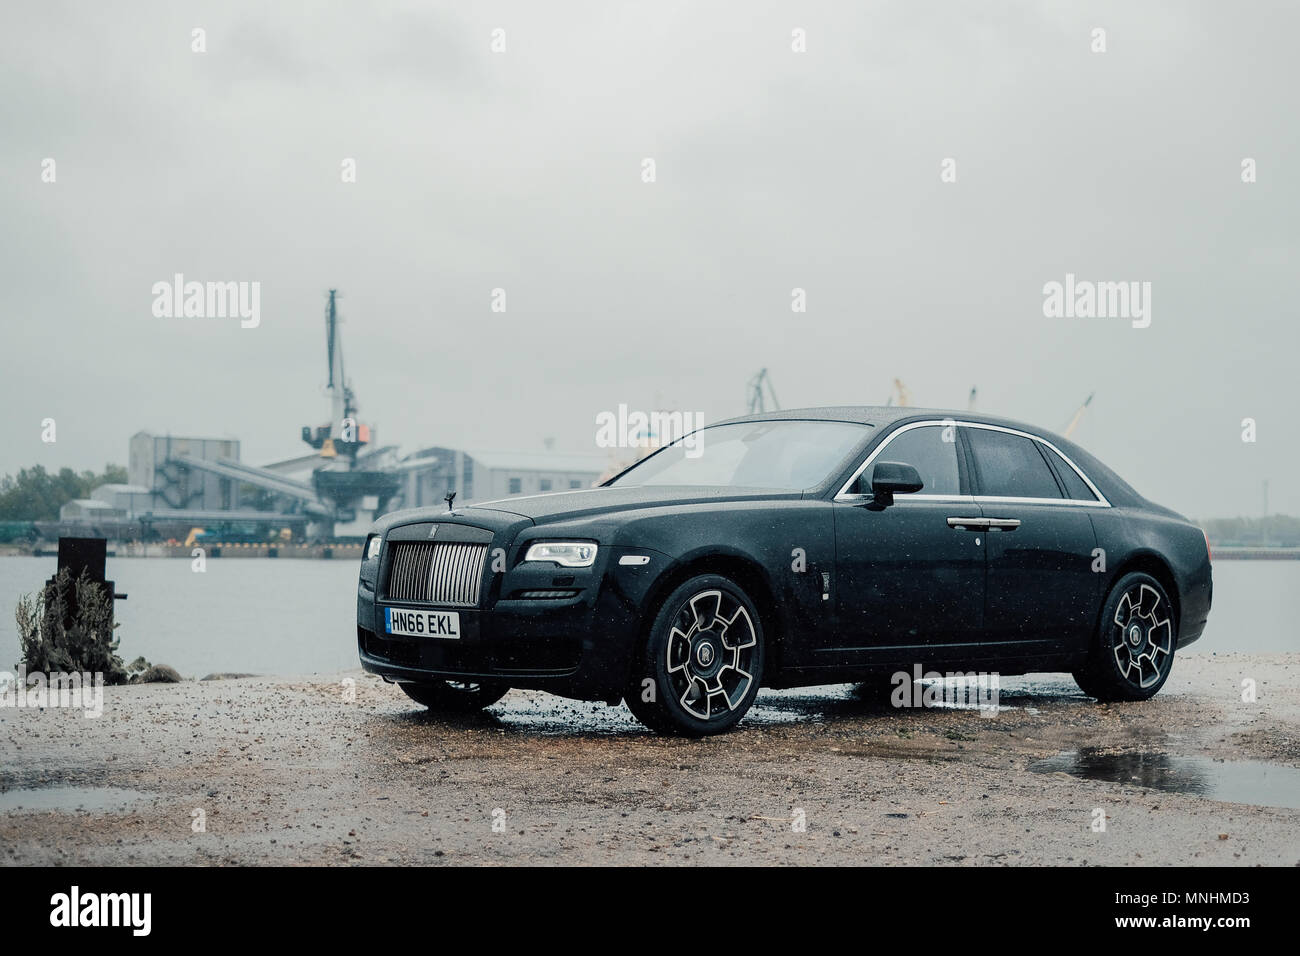 Limited Edition Rolls Royce Phantom Black